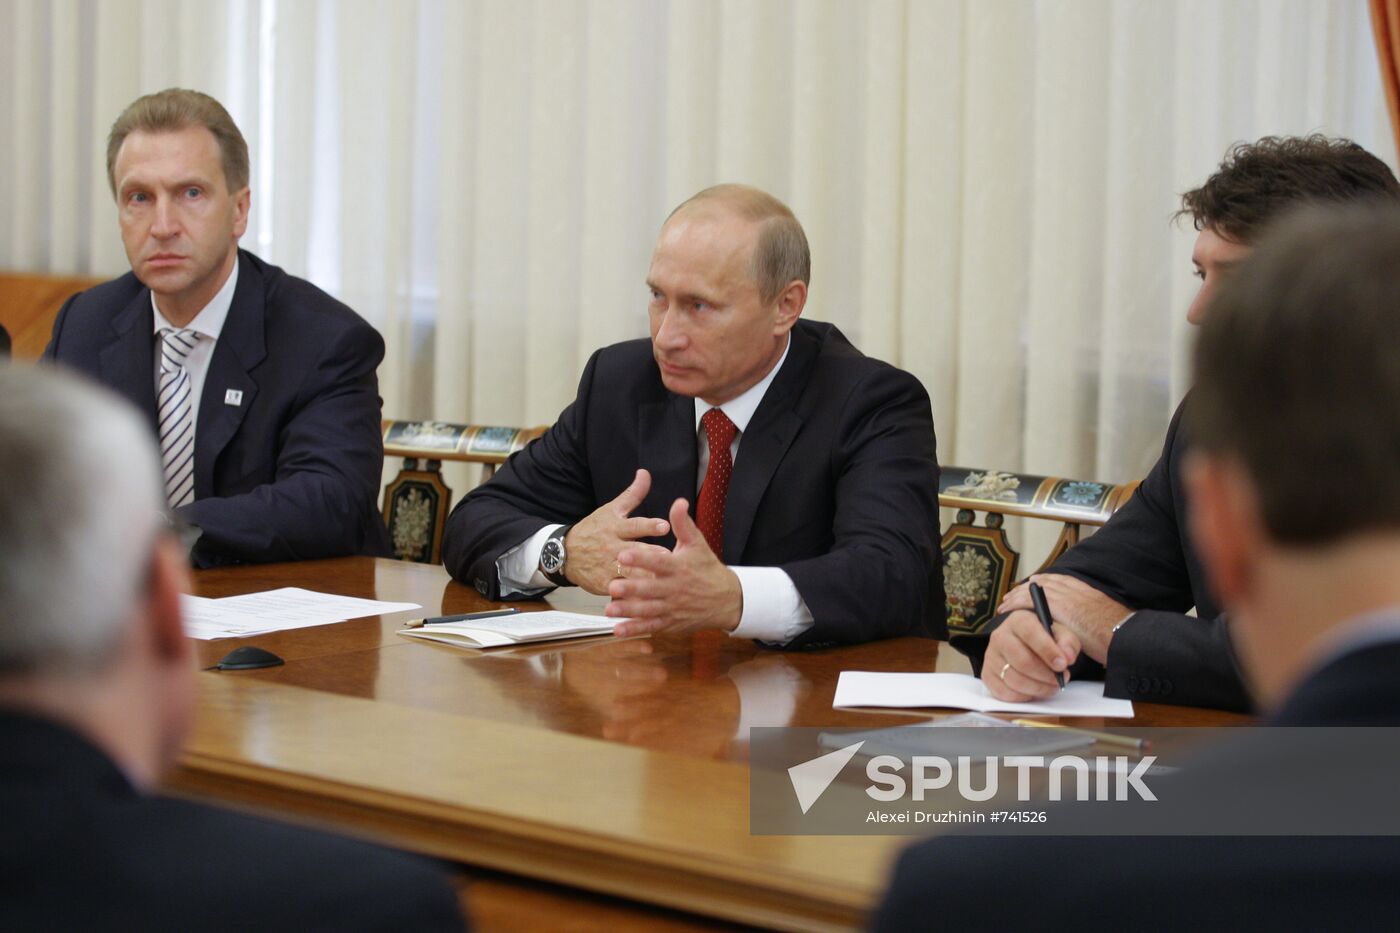 Vladimir Putin meets with FIFA commission